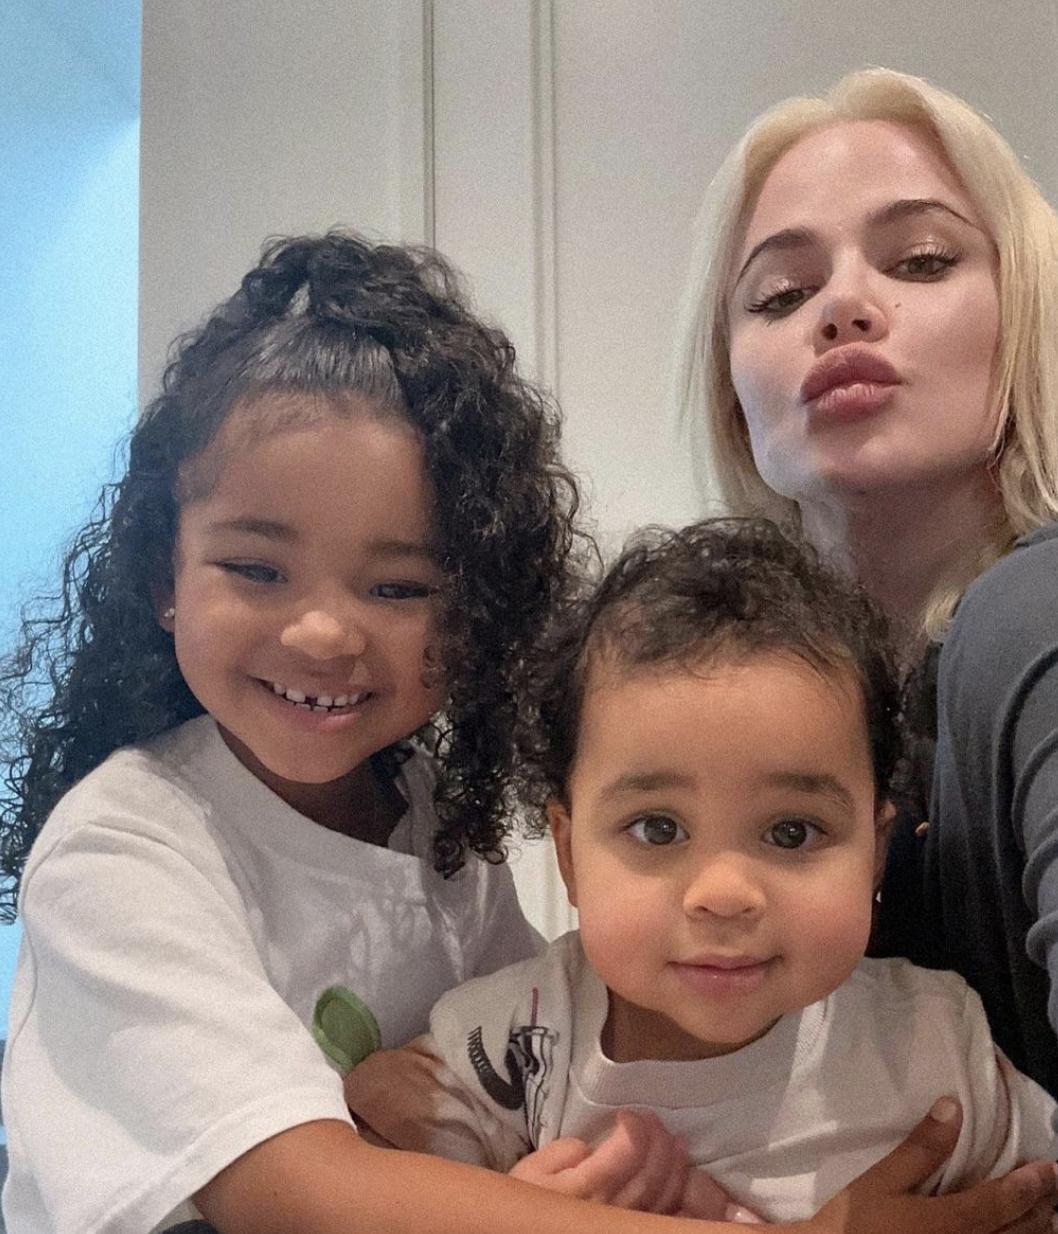 Khloe Kardashian has two kids